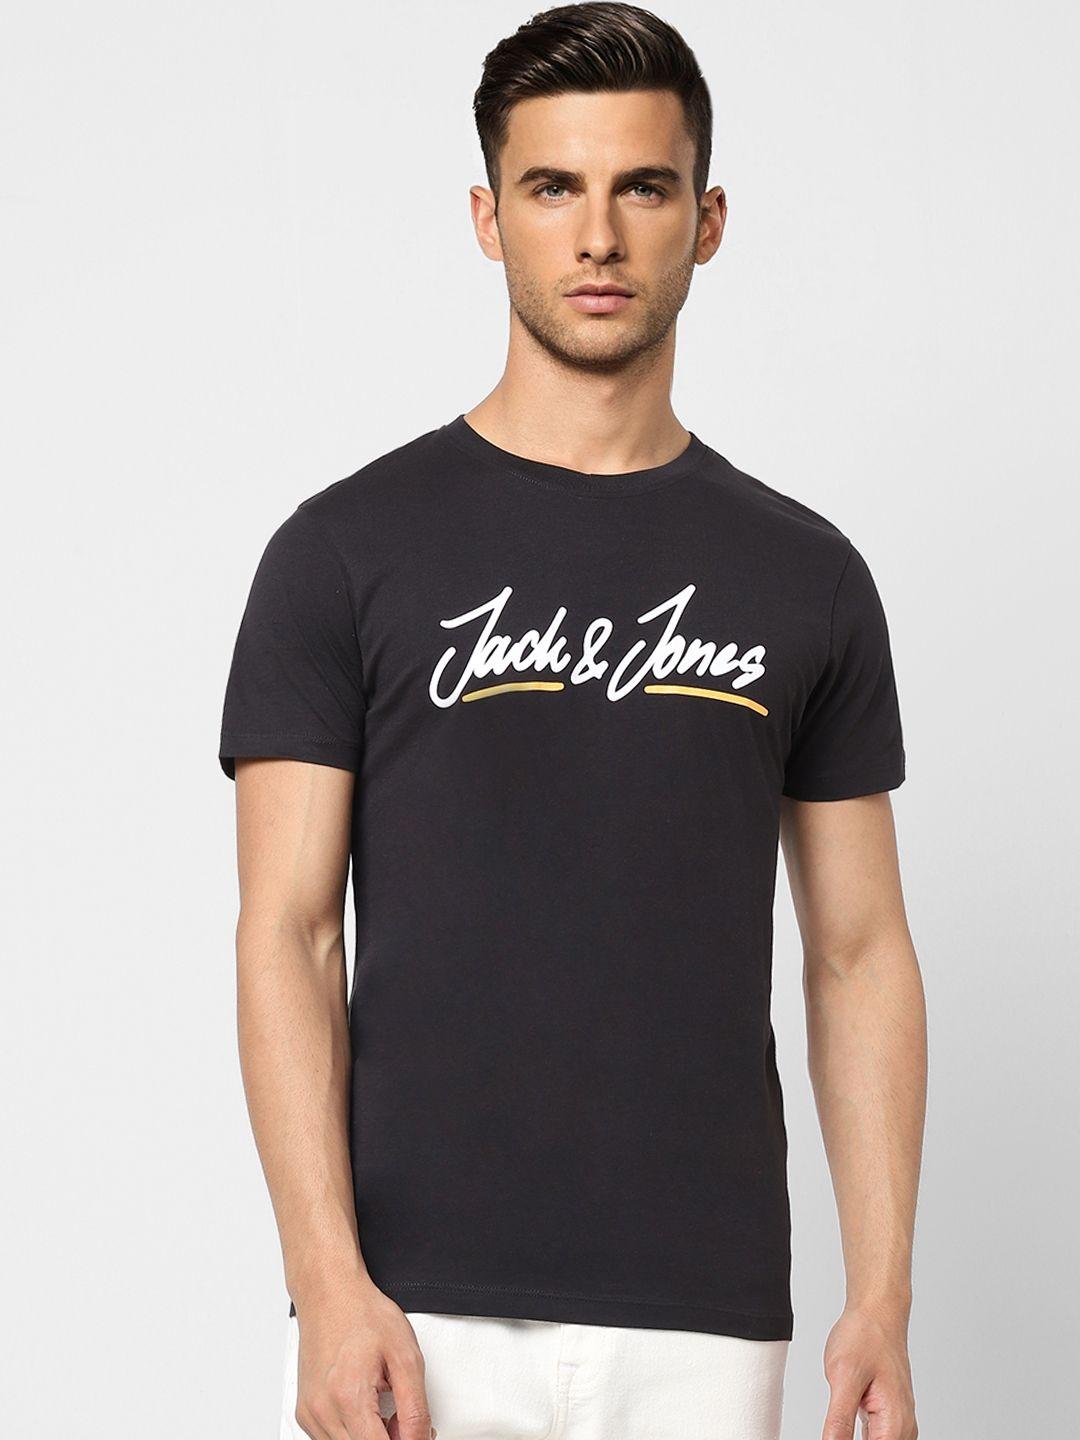 jack & jones men black & white brand logo printed pure cotton slim fit t-shirt